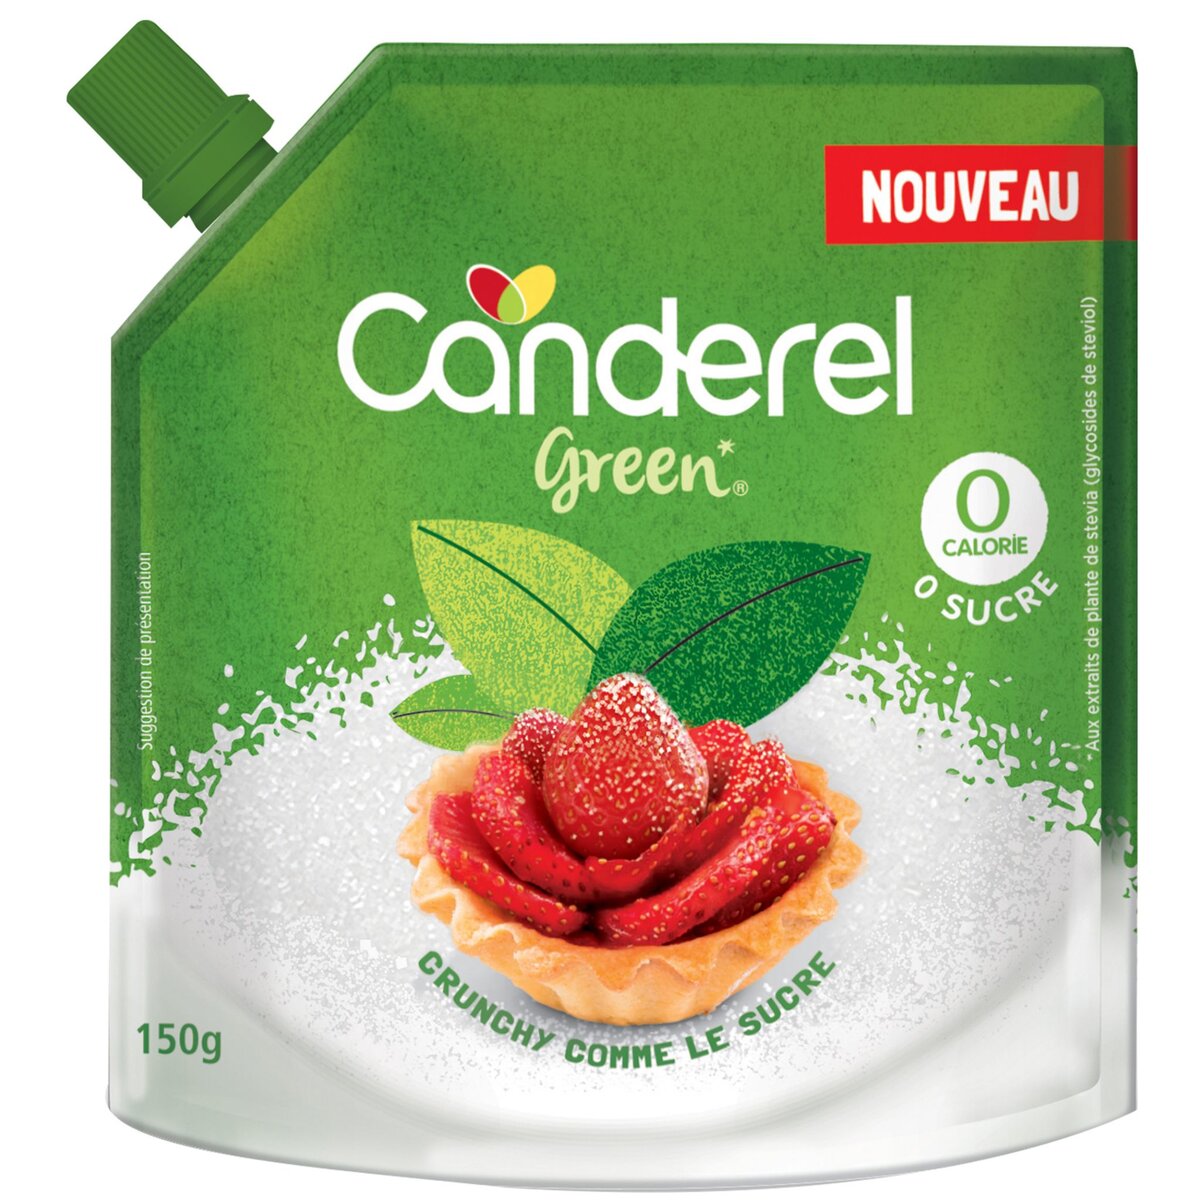 CANDEREL Green édulcorant 0 calorie 0 sucre 150g pas cher 